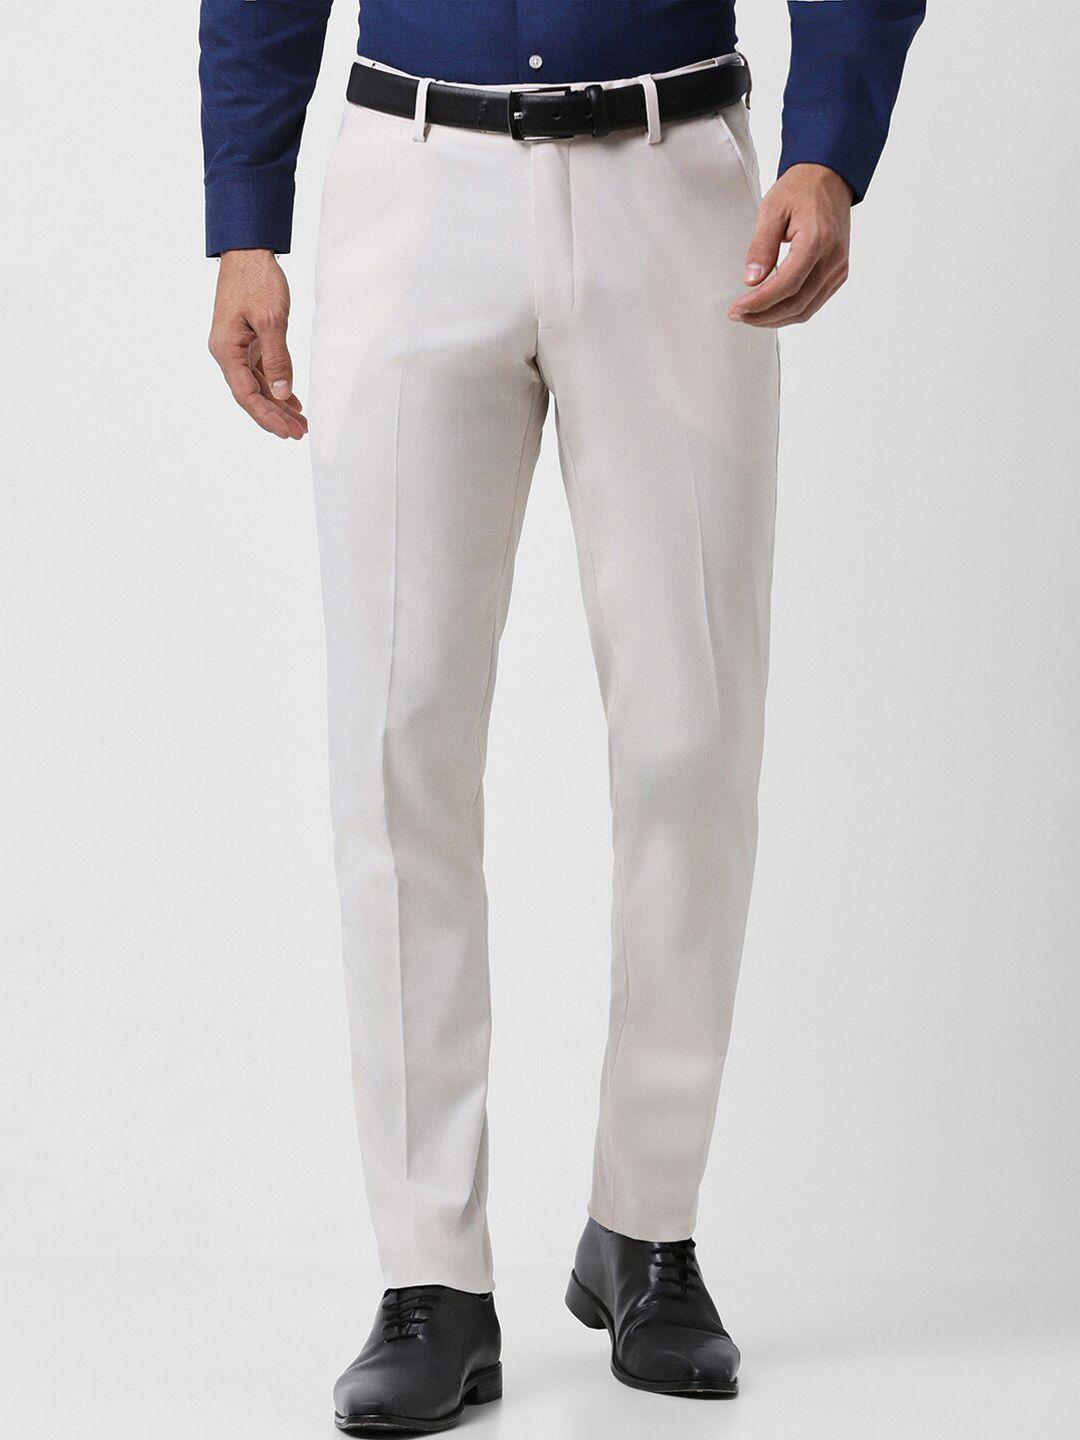 peter-england-men-slim-fit-mid-rise-formal-trouser